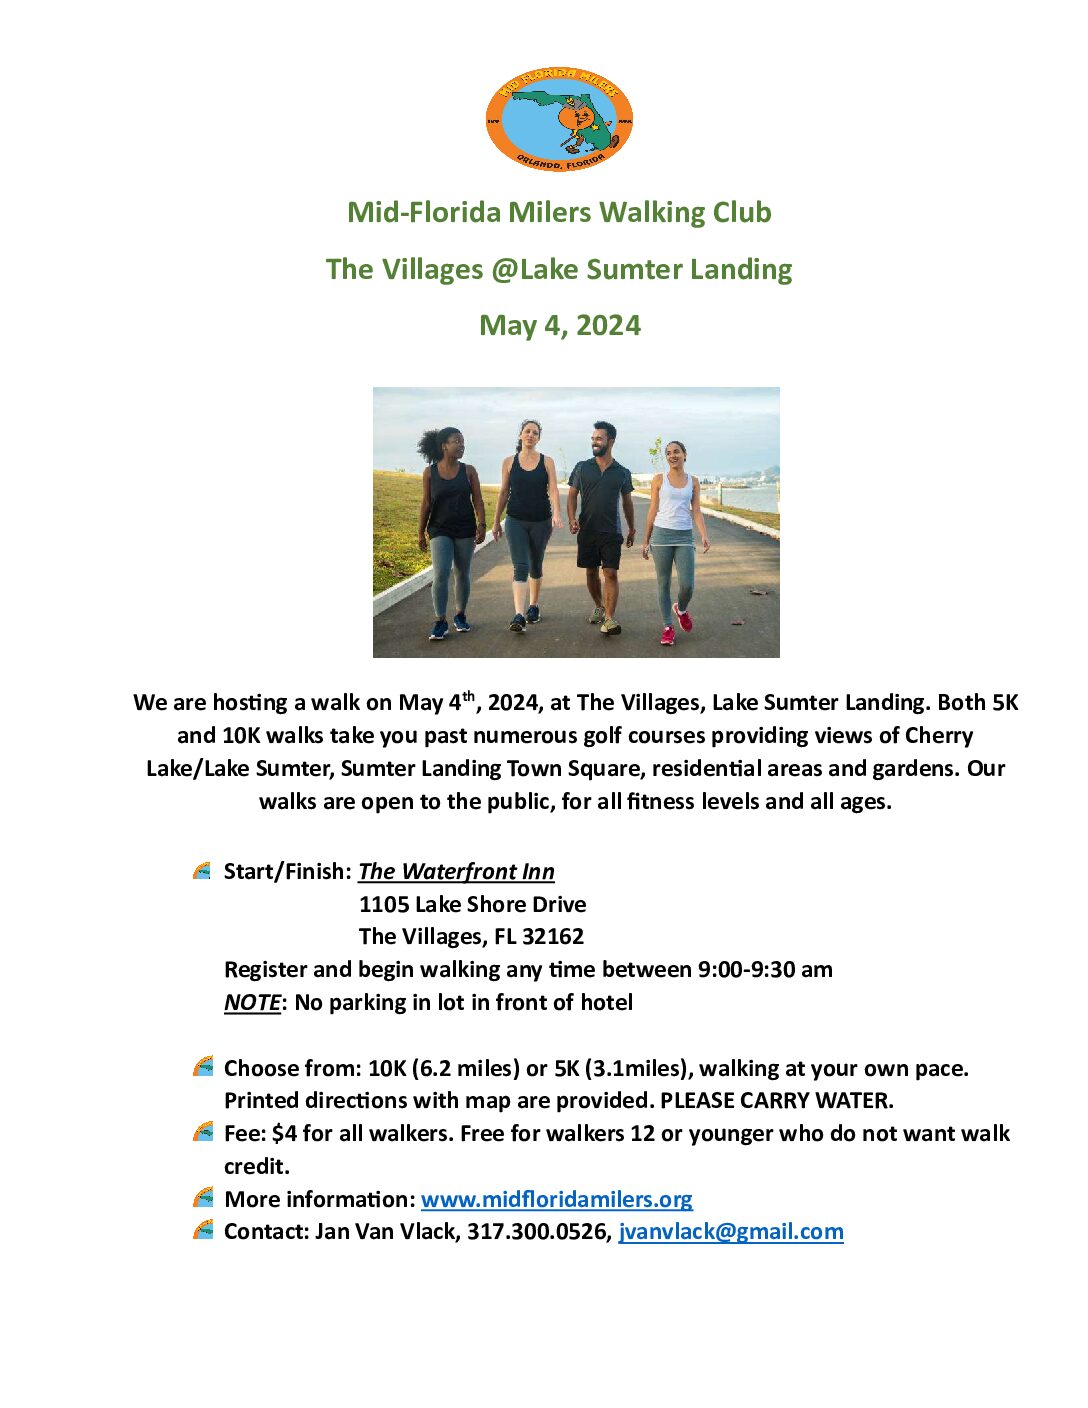 Mid-Florida Milers Walking Club @ The Villages